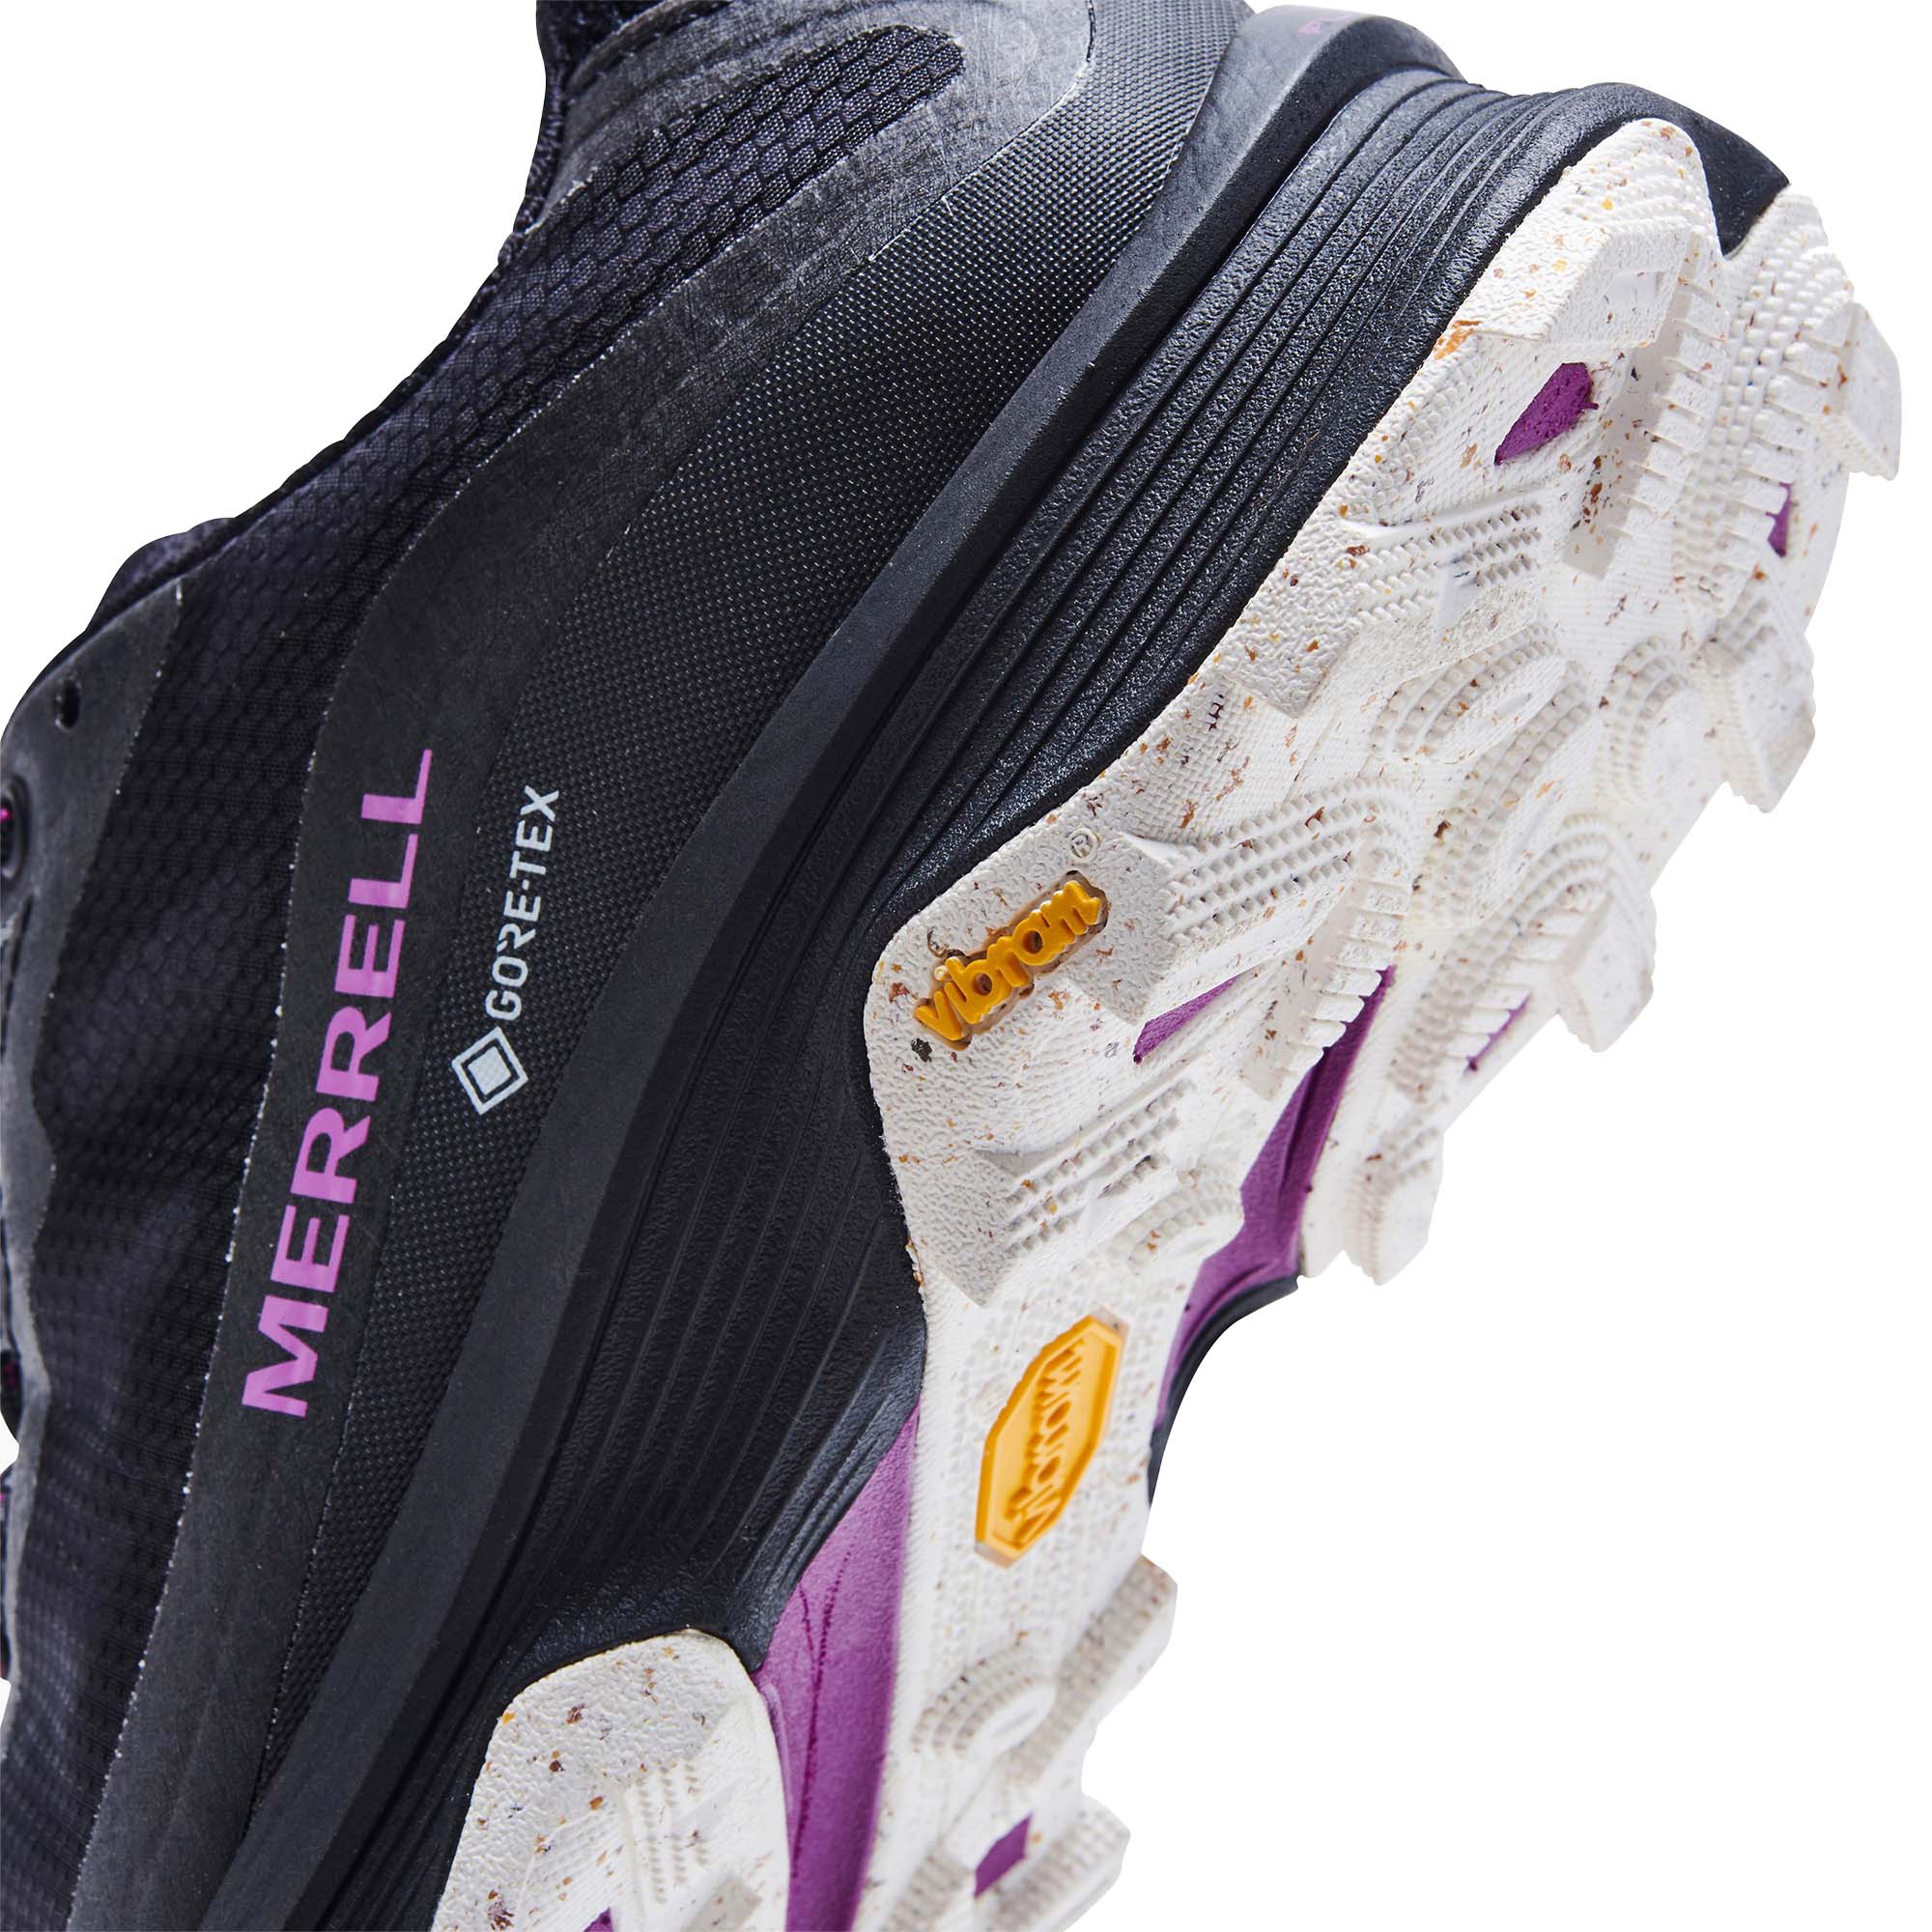 Merrell Moab Speed GTX Women's Hiking Shoes